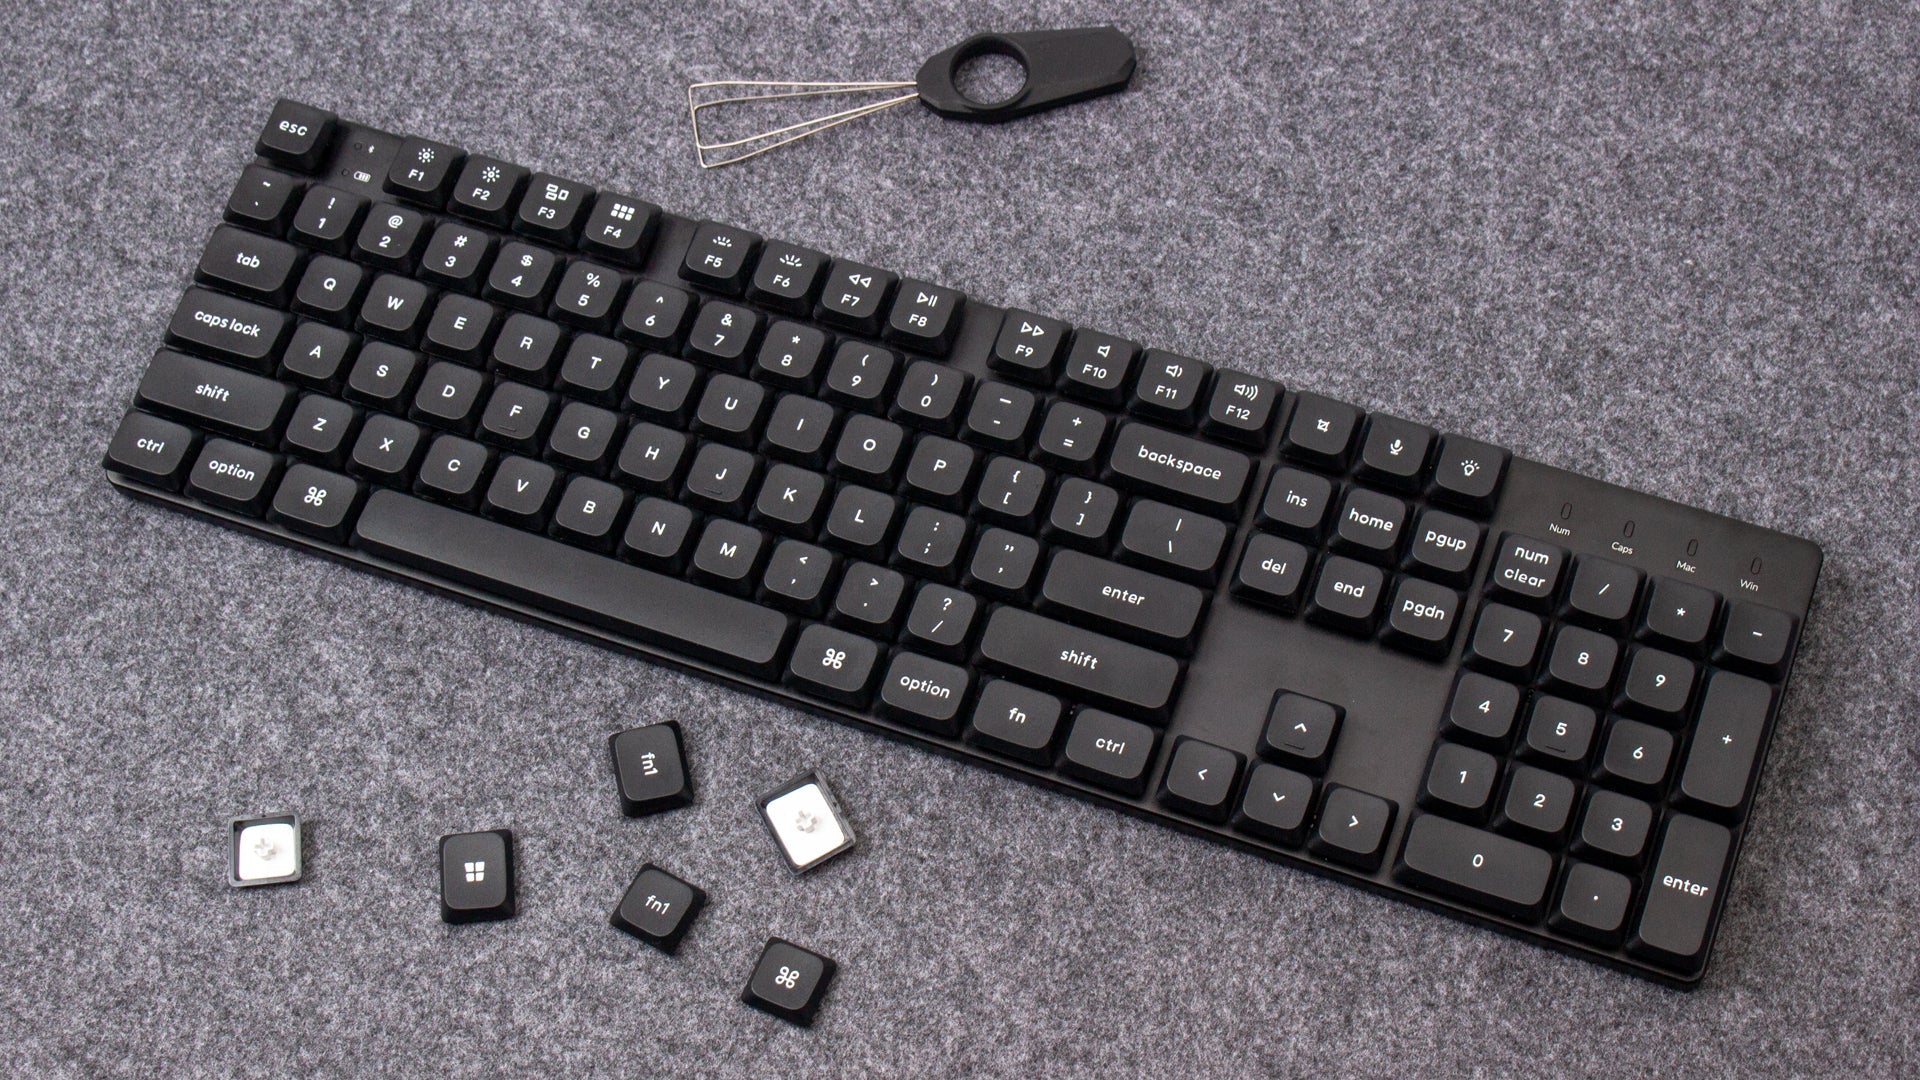  Womier Low Profile Keycaps - Shine Through Keycaps, Keyboard  Keycaps 75 Percent PBT Keycaps, Full Size Keycaps for 60% 65% 75% 80% 100%  Cherry Gateron MX Switches Mechanical Keyboard, Grey/White : Electronics